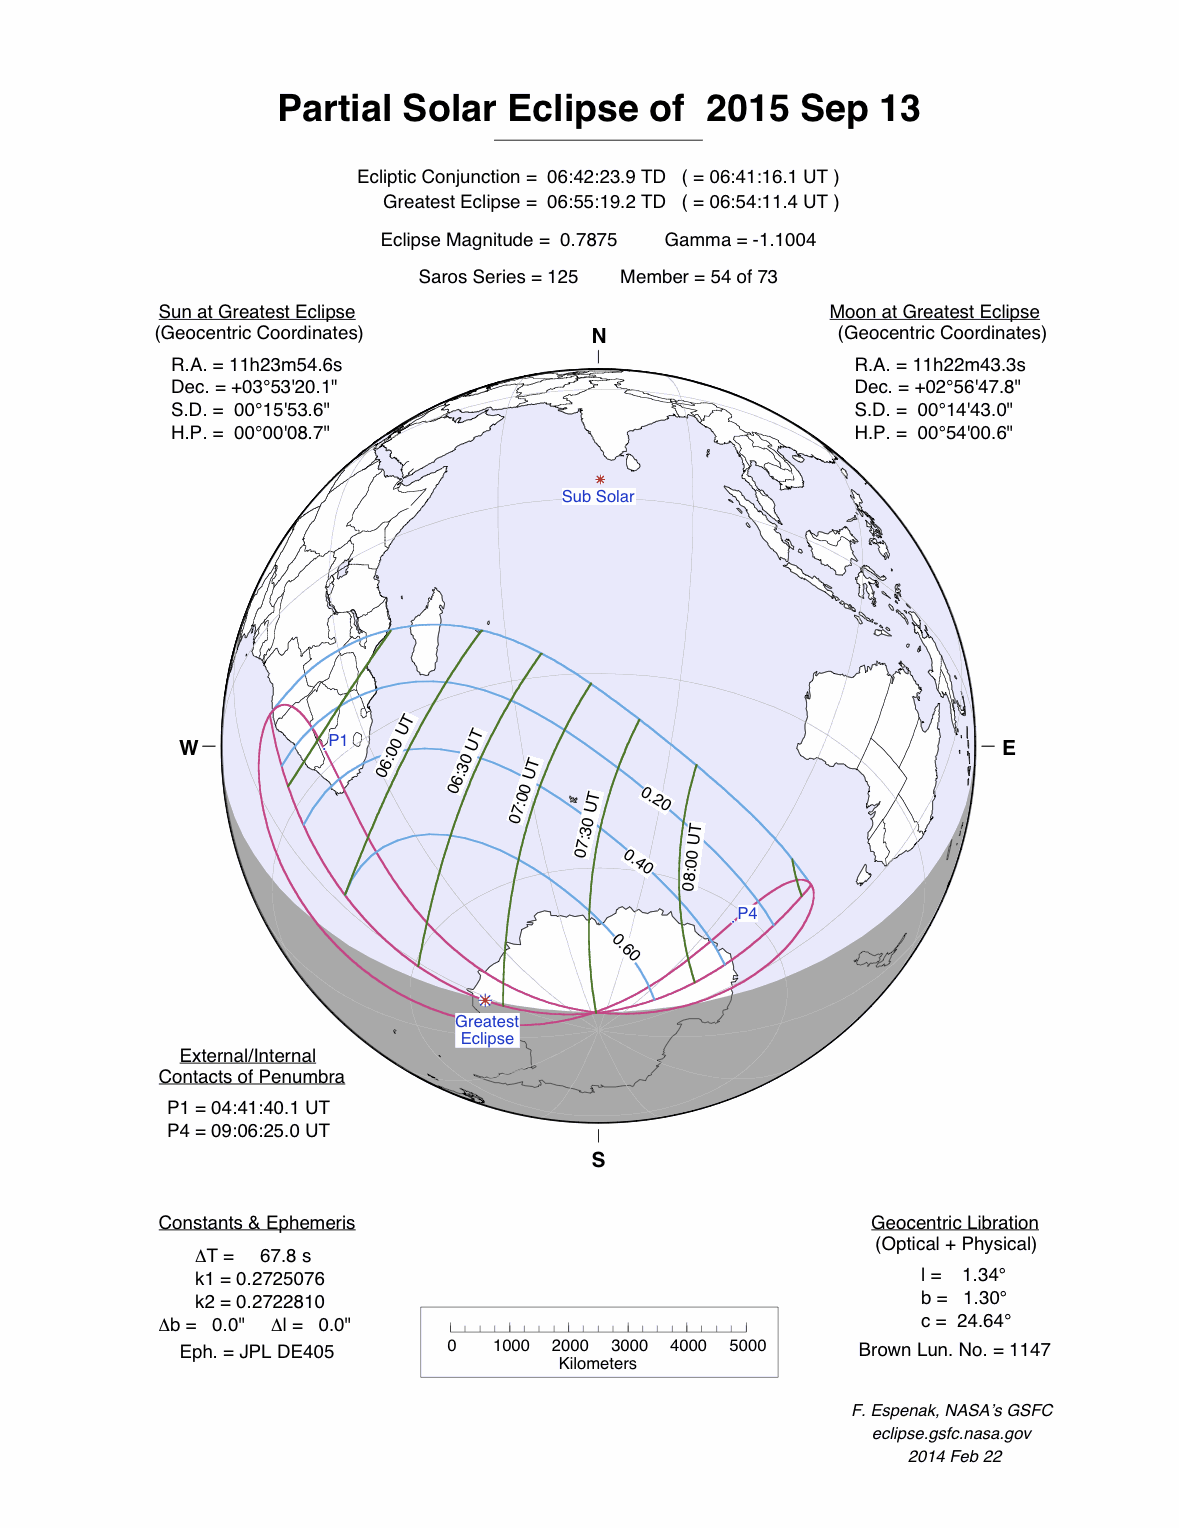 Partial Solar Eclipse diagram by NASA